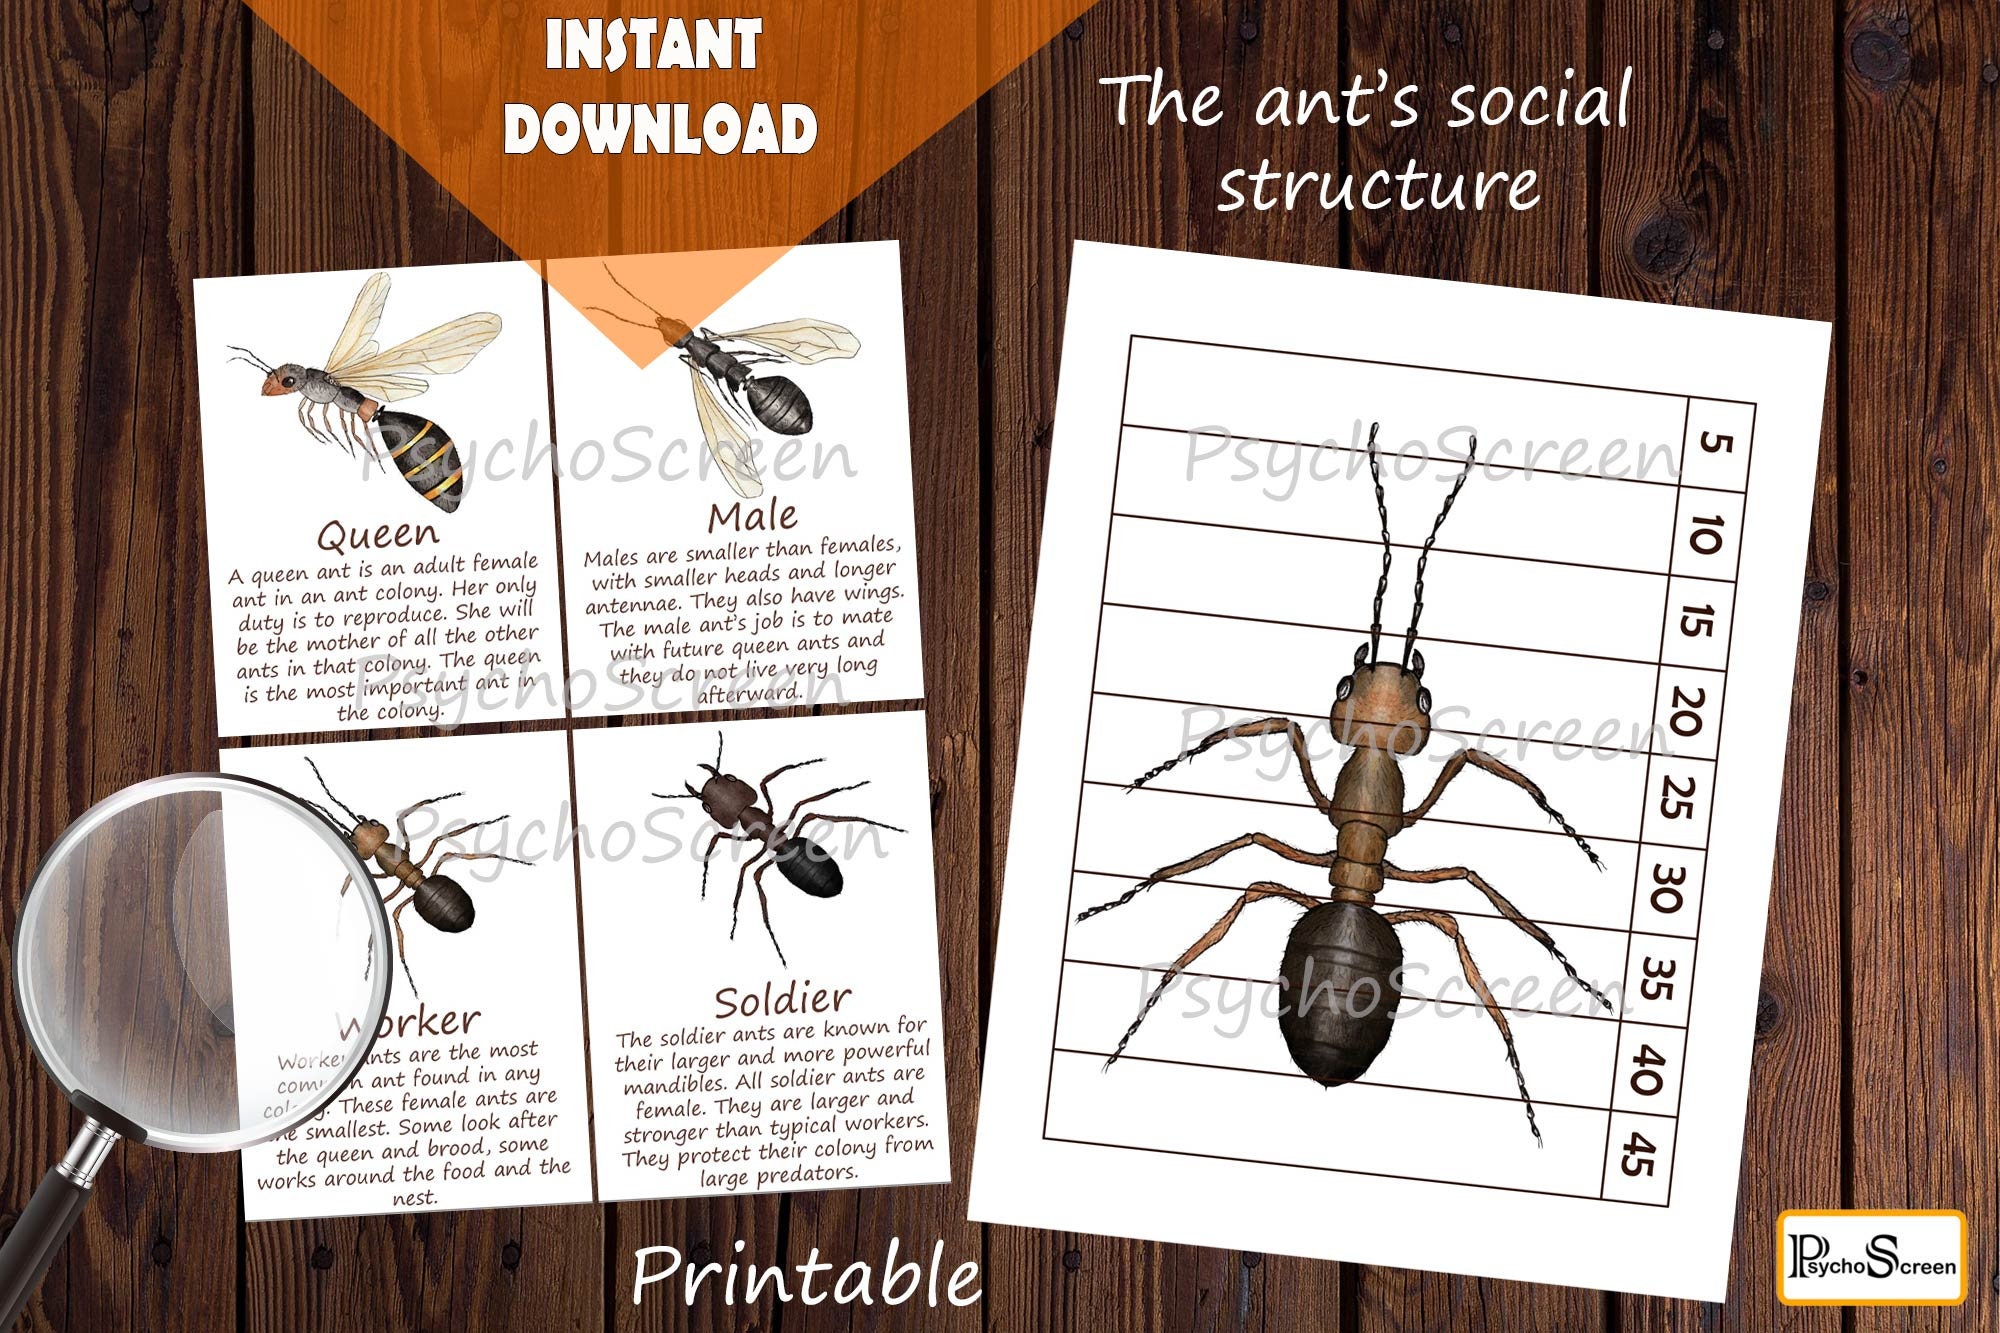 ANT COLONY Unit Study MINI Printable Ants Bundle Poster 